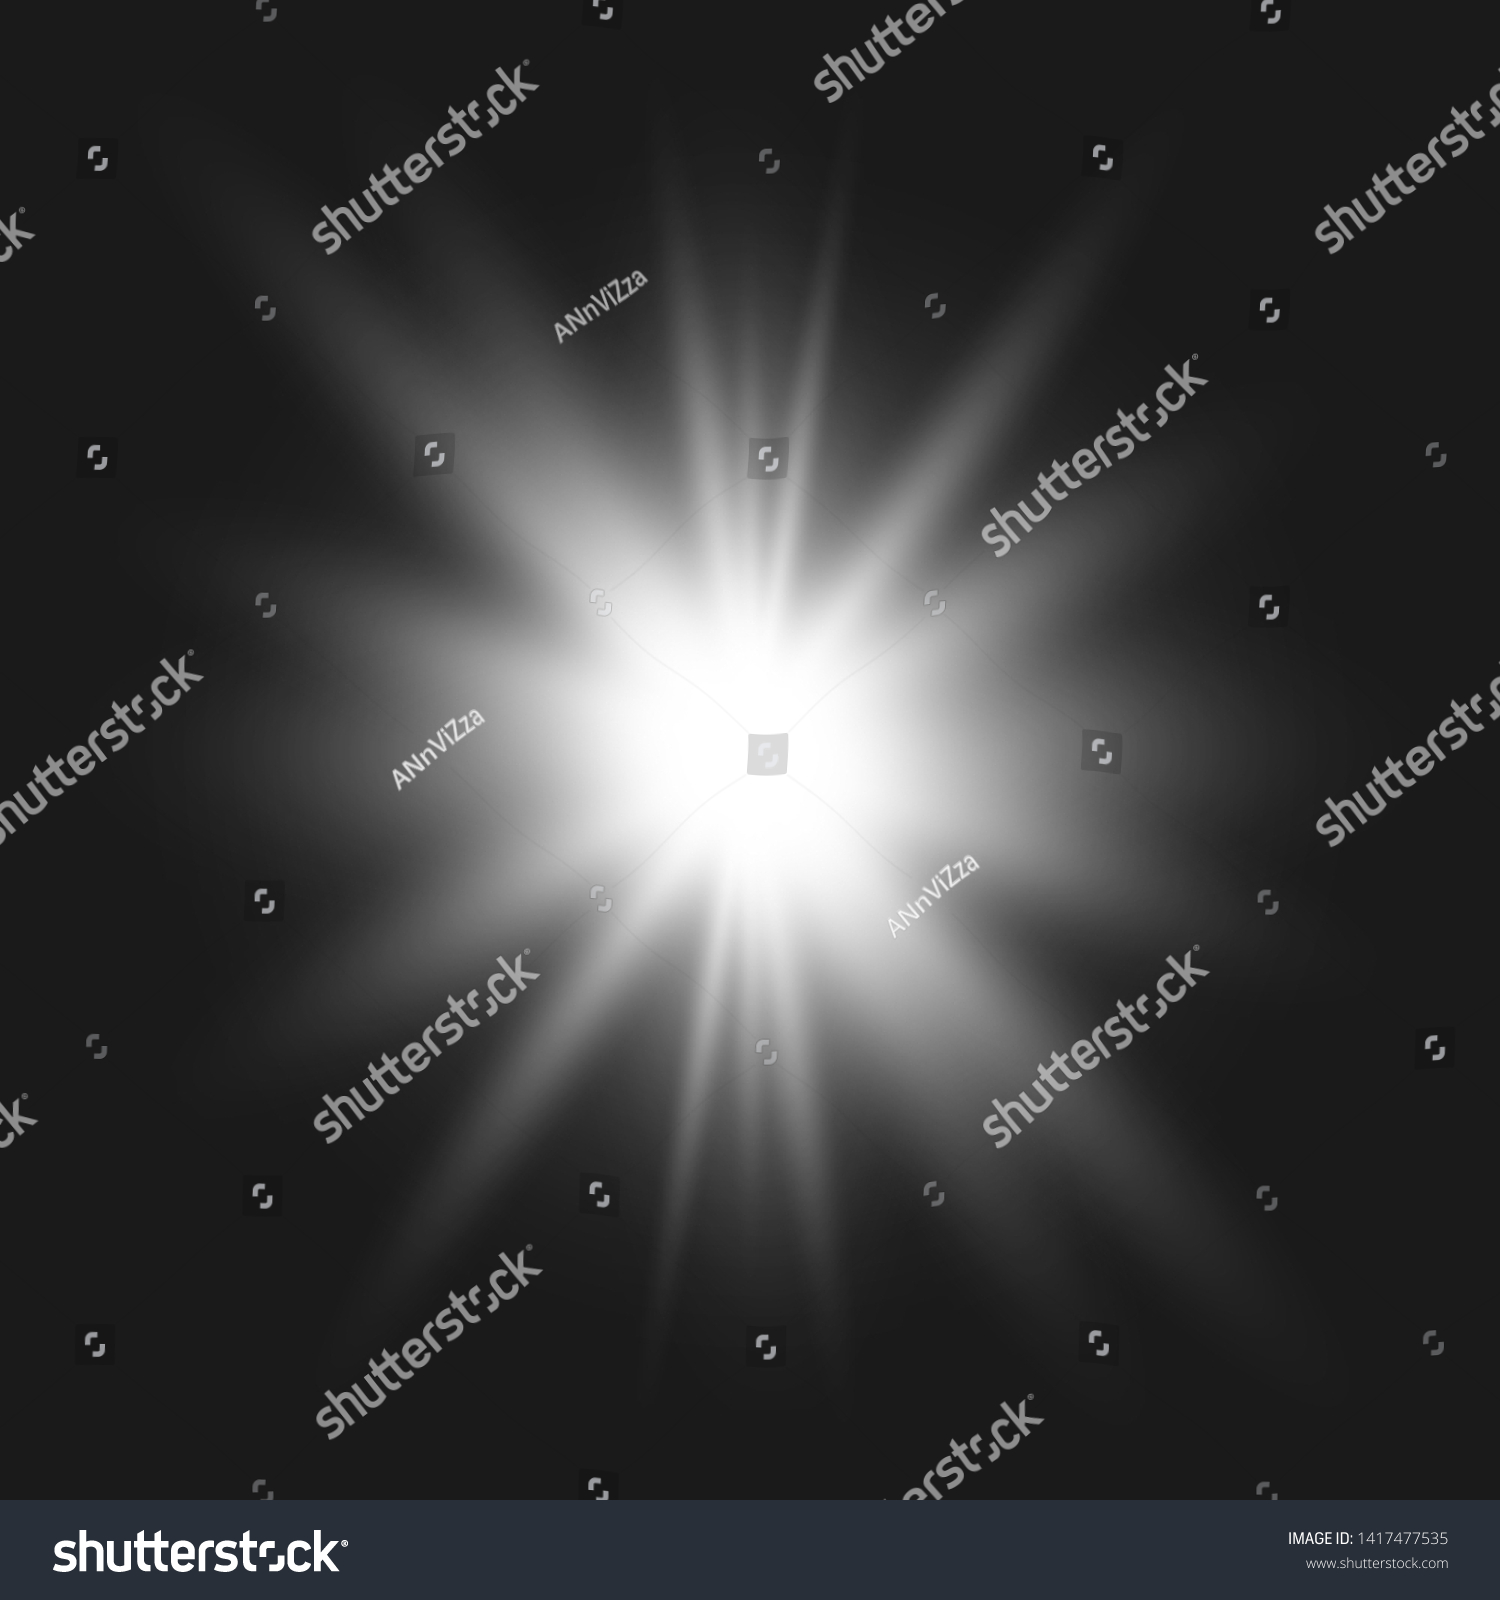 1 Horizontal rays oflight Images, Stock Photos & Vectors | Shutterstock